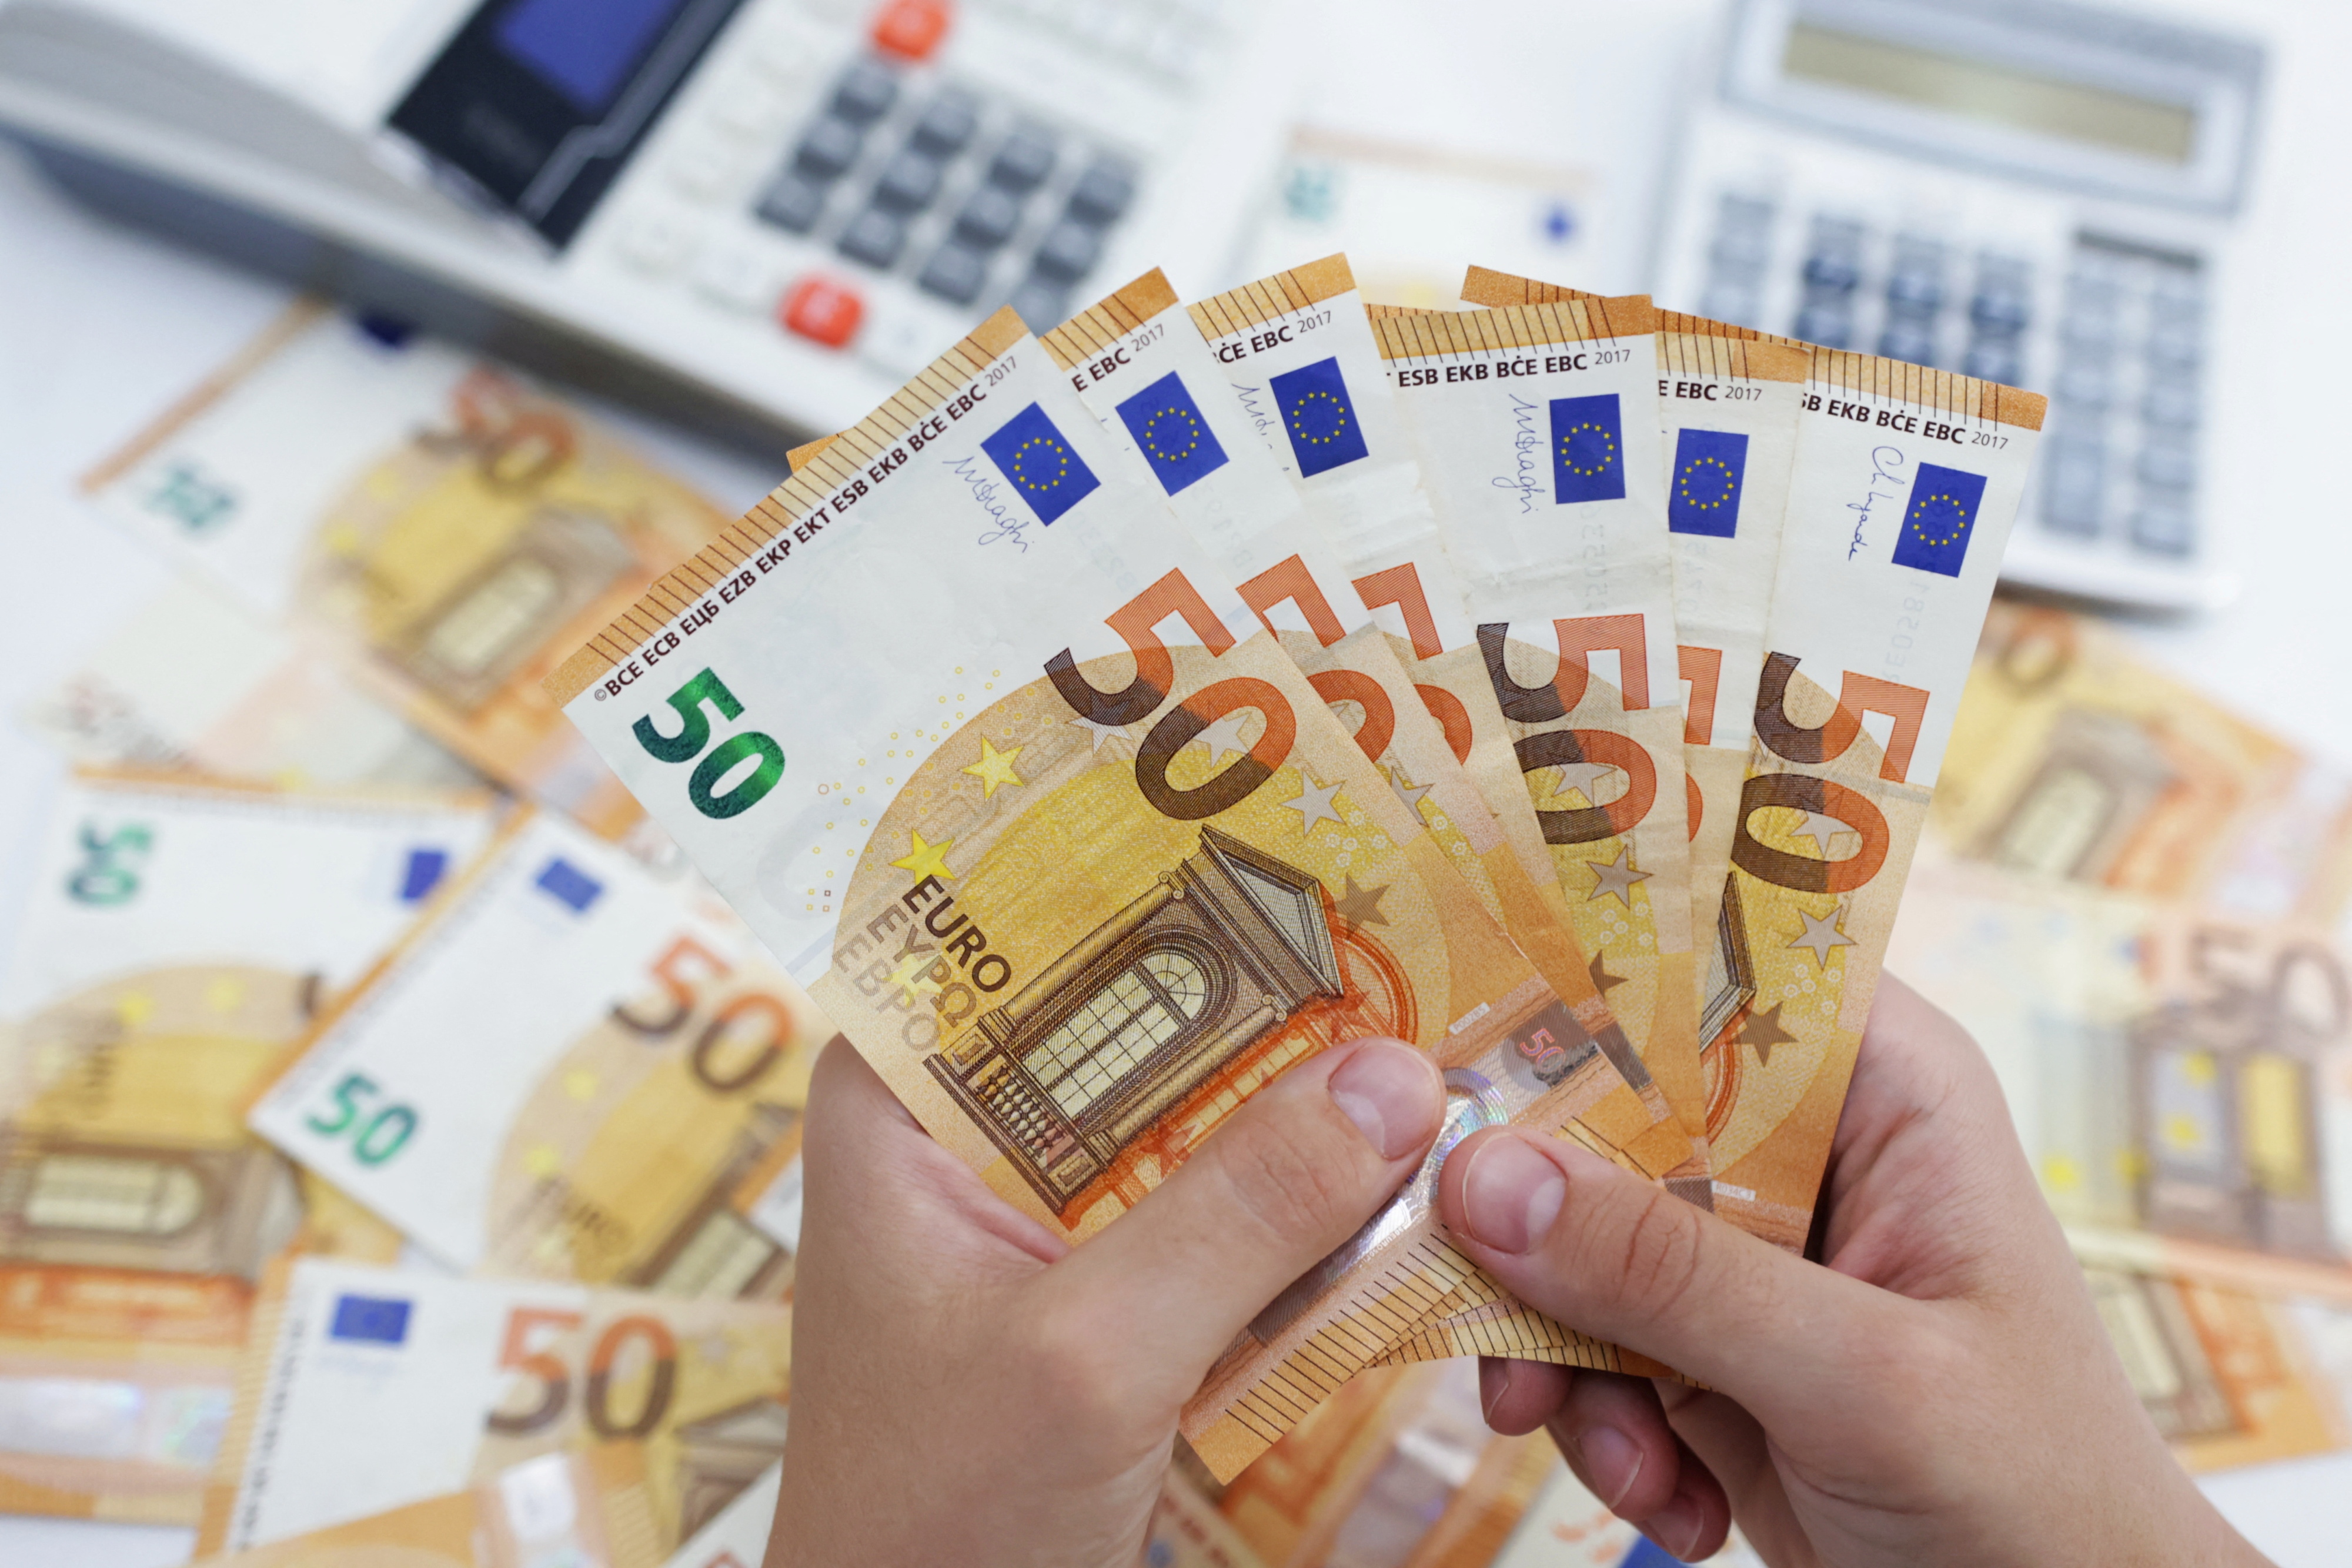 Illustration shows Euro banknotes